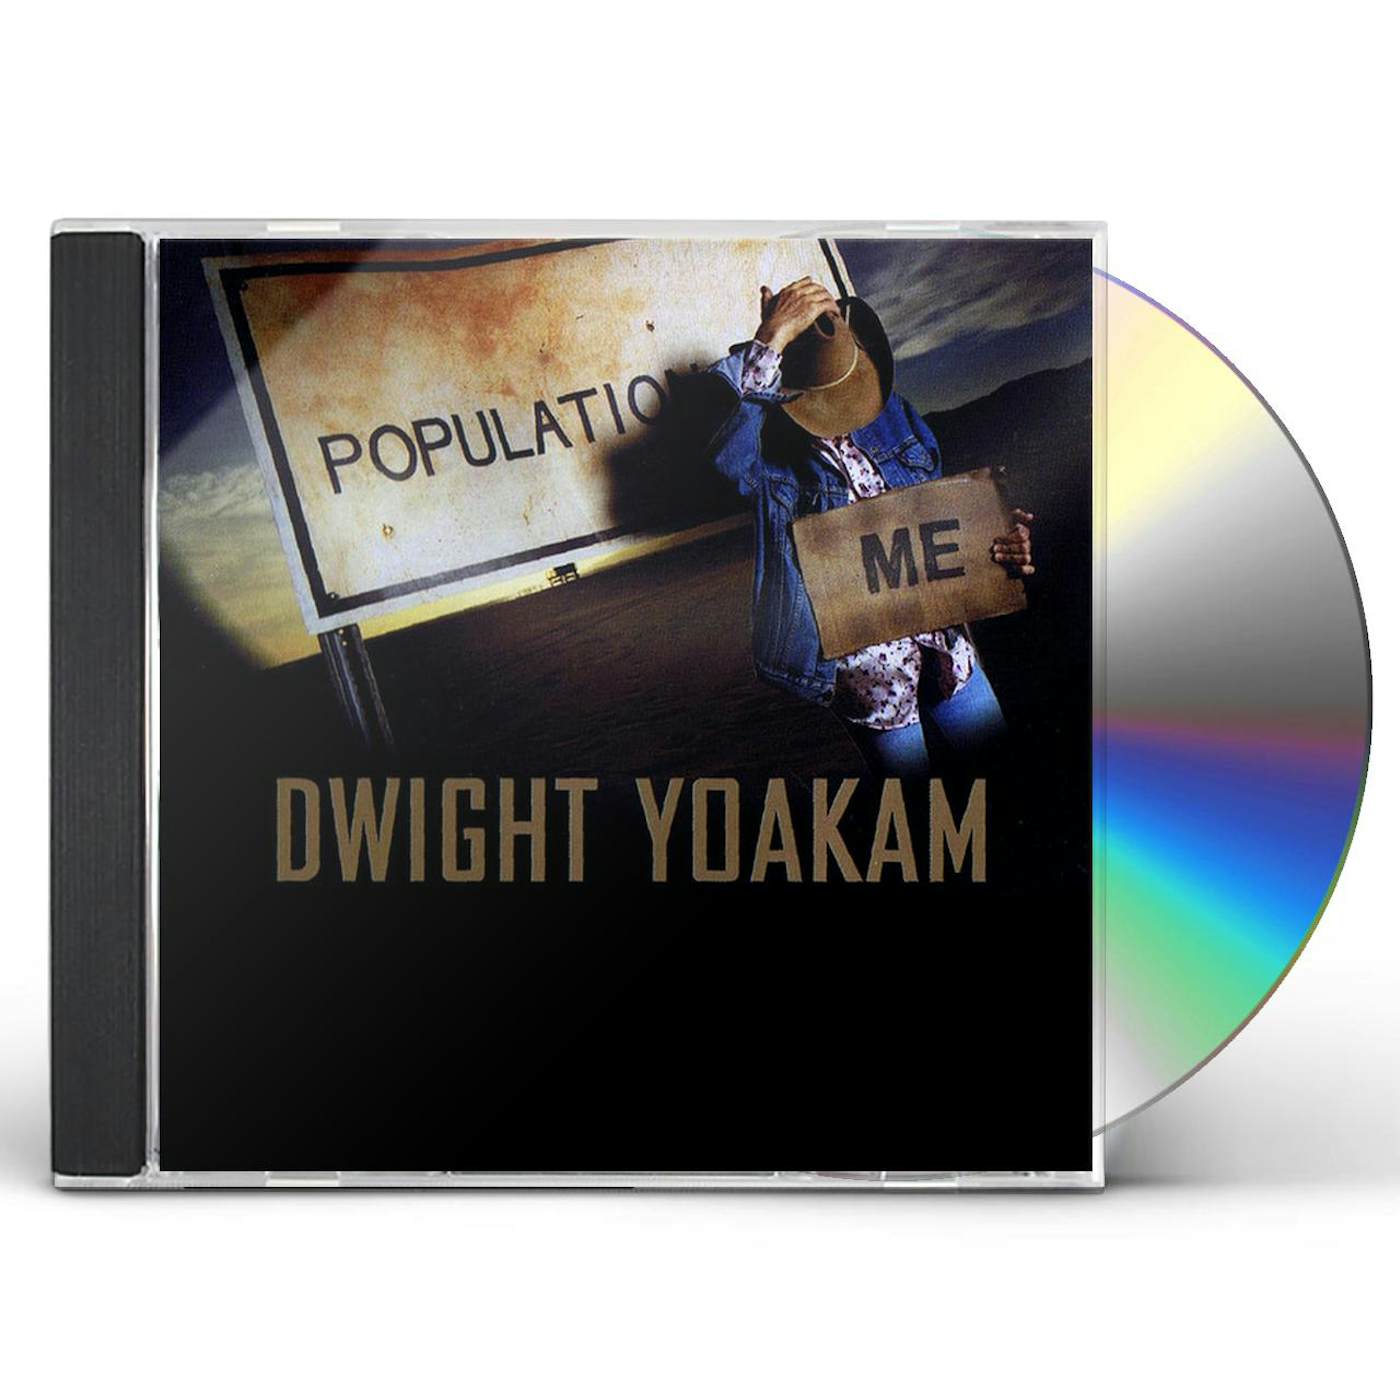 Dwight Yoakam POPULATION: ME CD